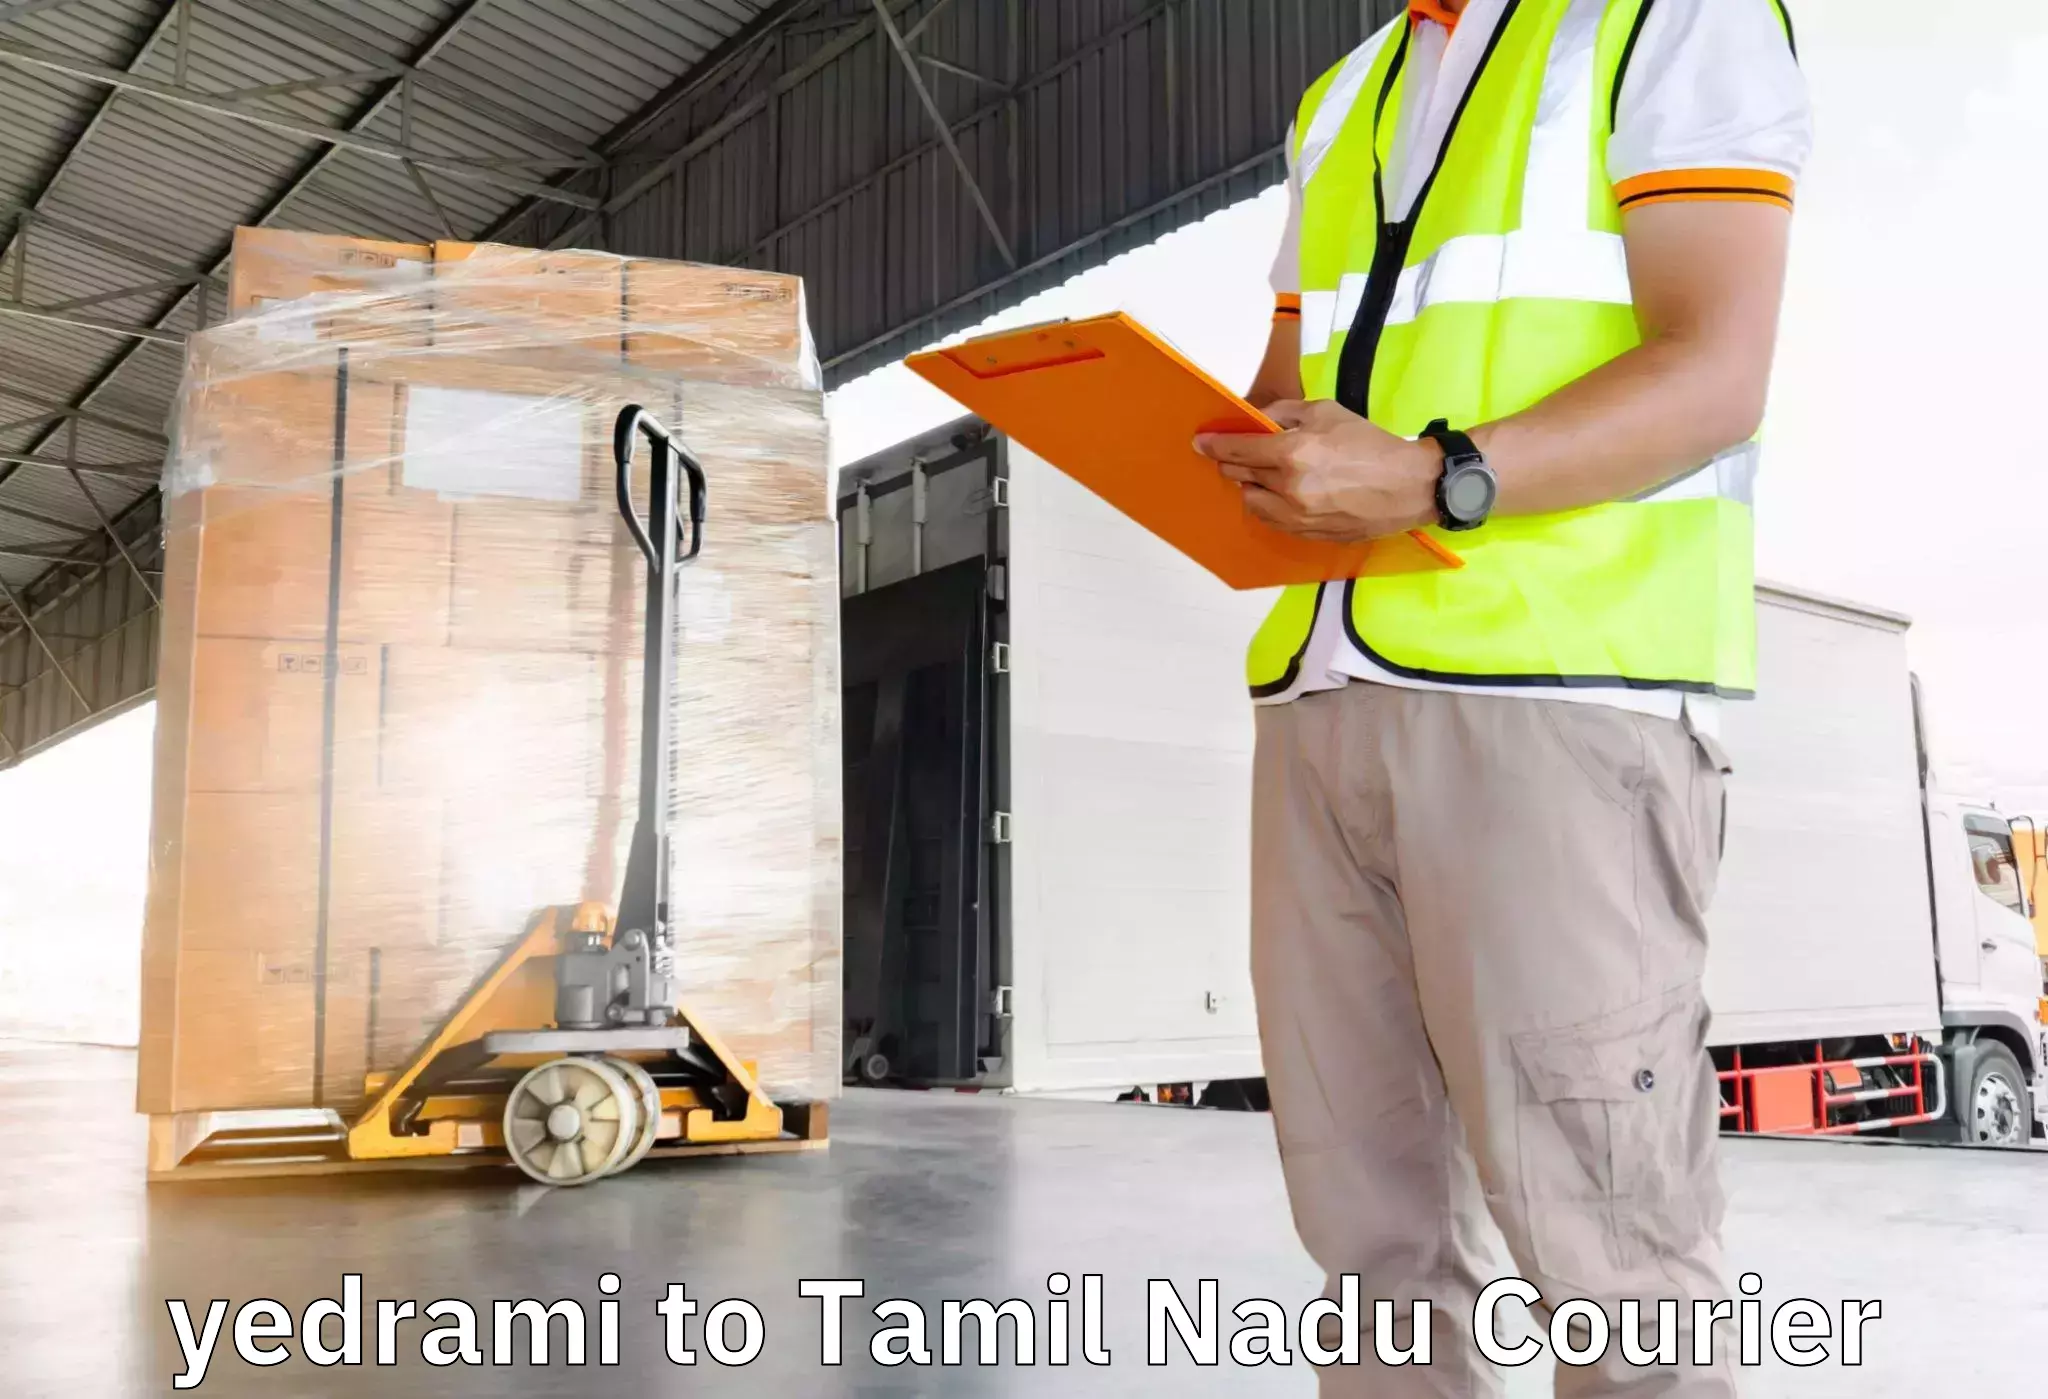 Trusted moving company yedrami to Tirupattur